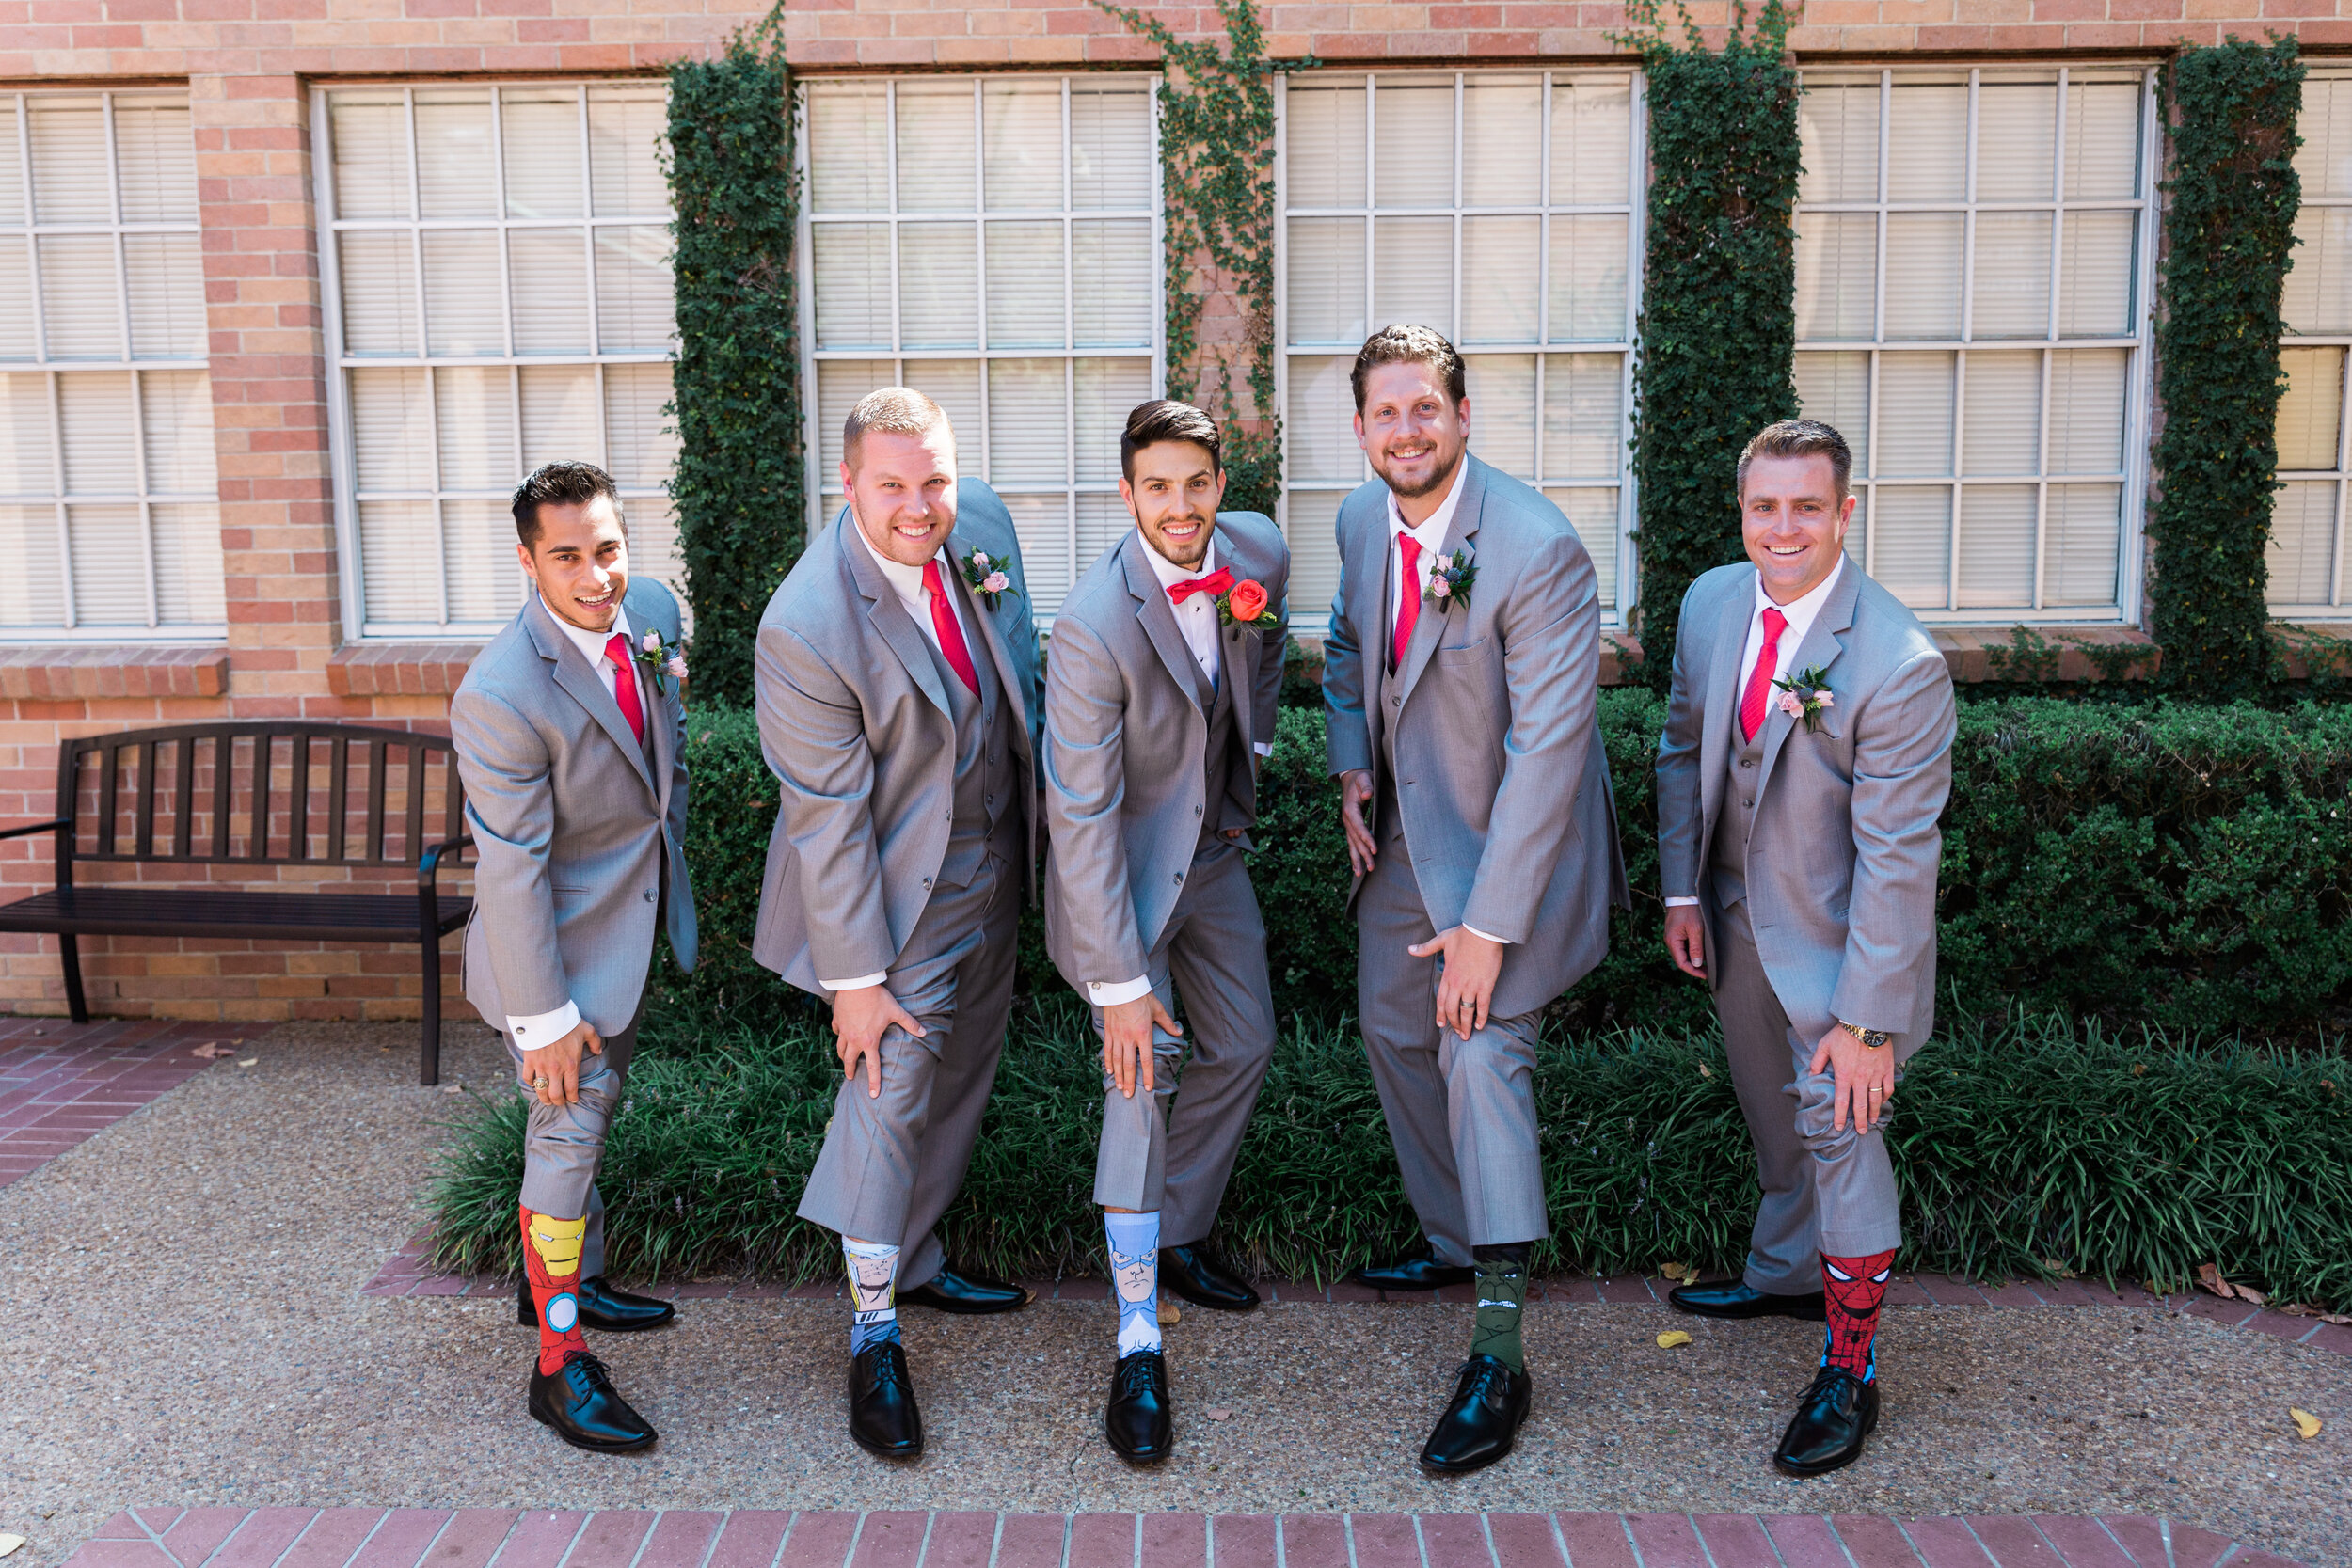 wedding grooms party portrait avengers socks second baptist houston tx